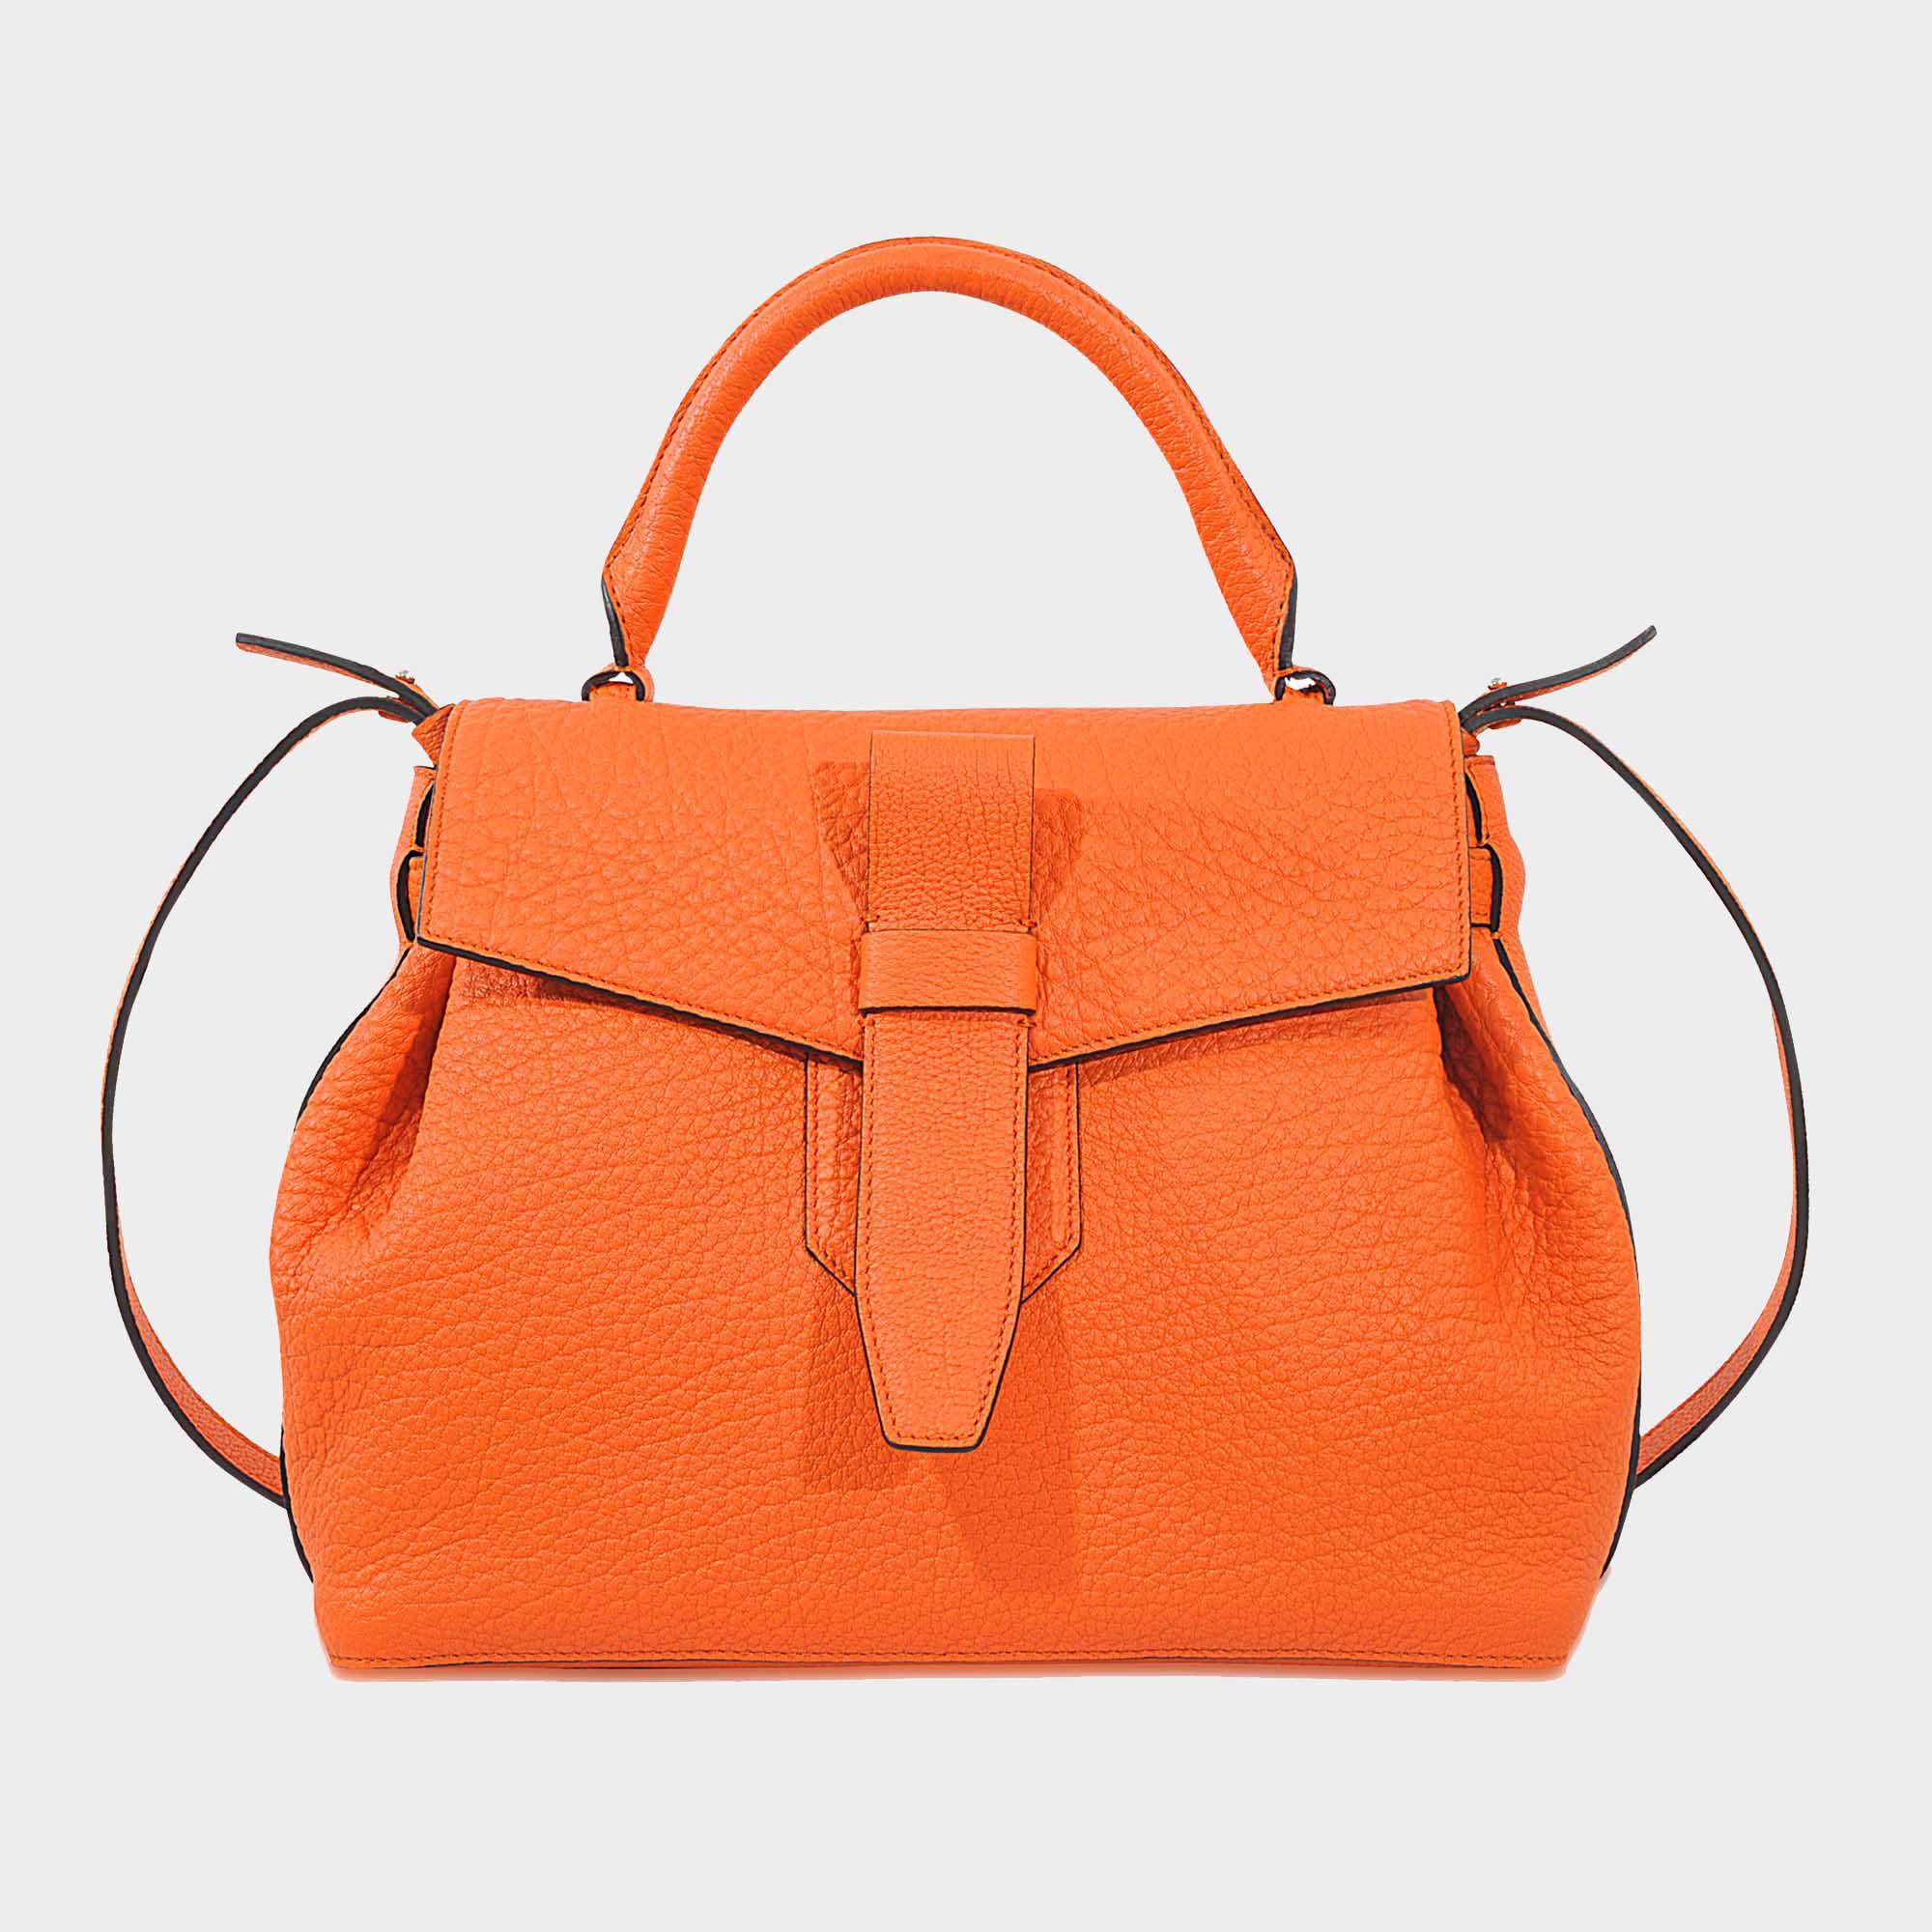 Lancel Leather Charlie Handbag in Orange - Lyst